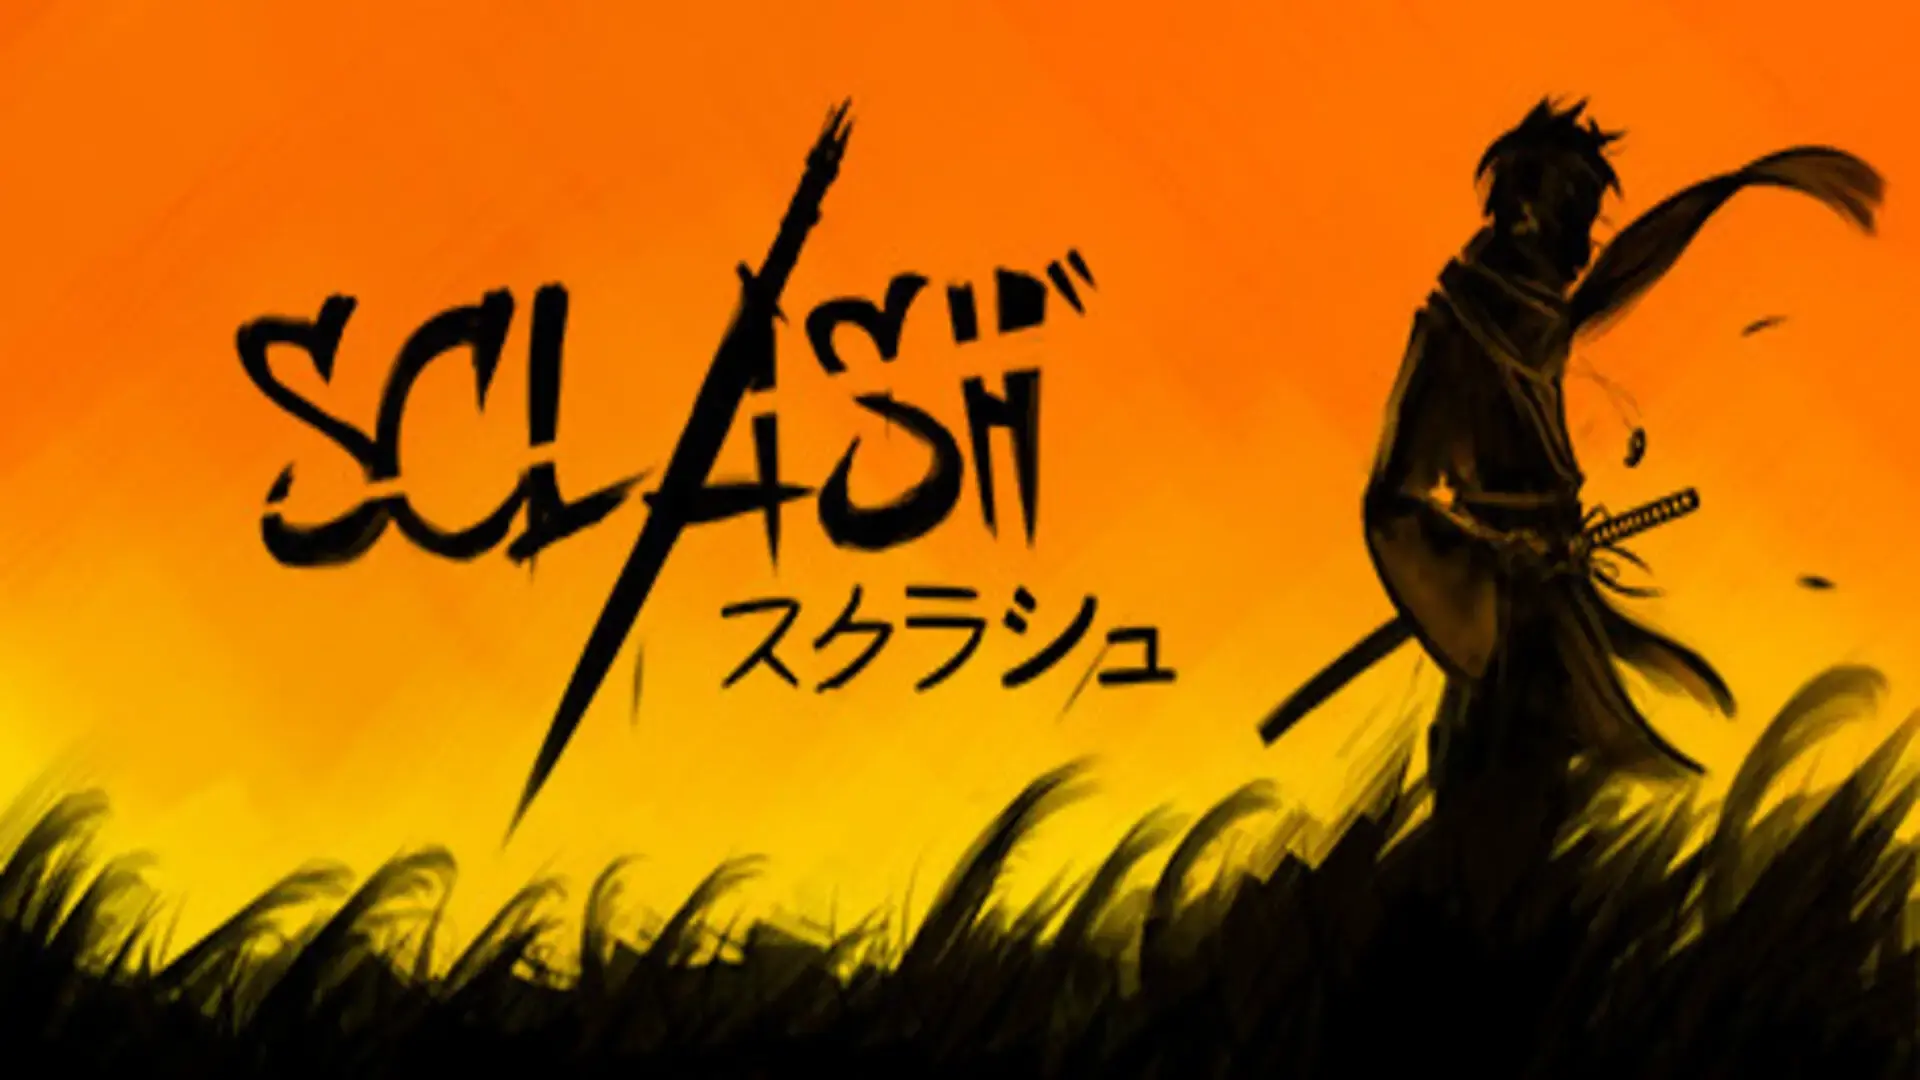 Sclash – Free Download (v1.1.33)